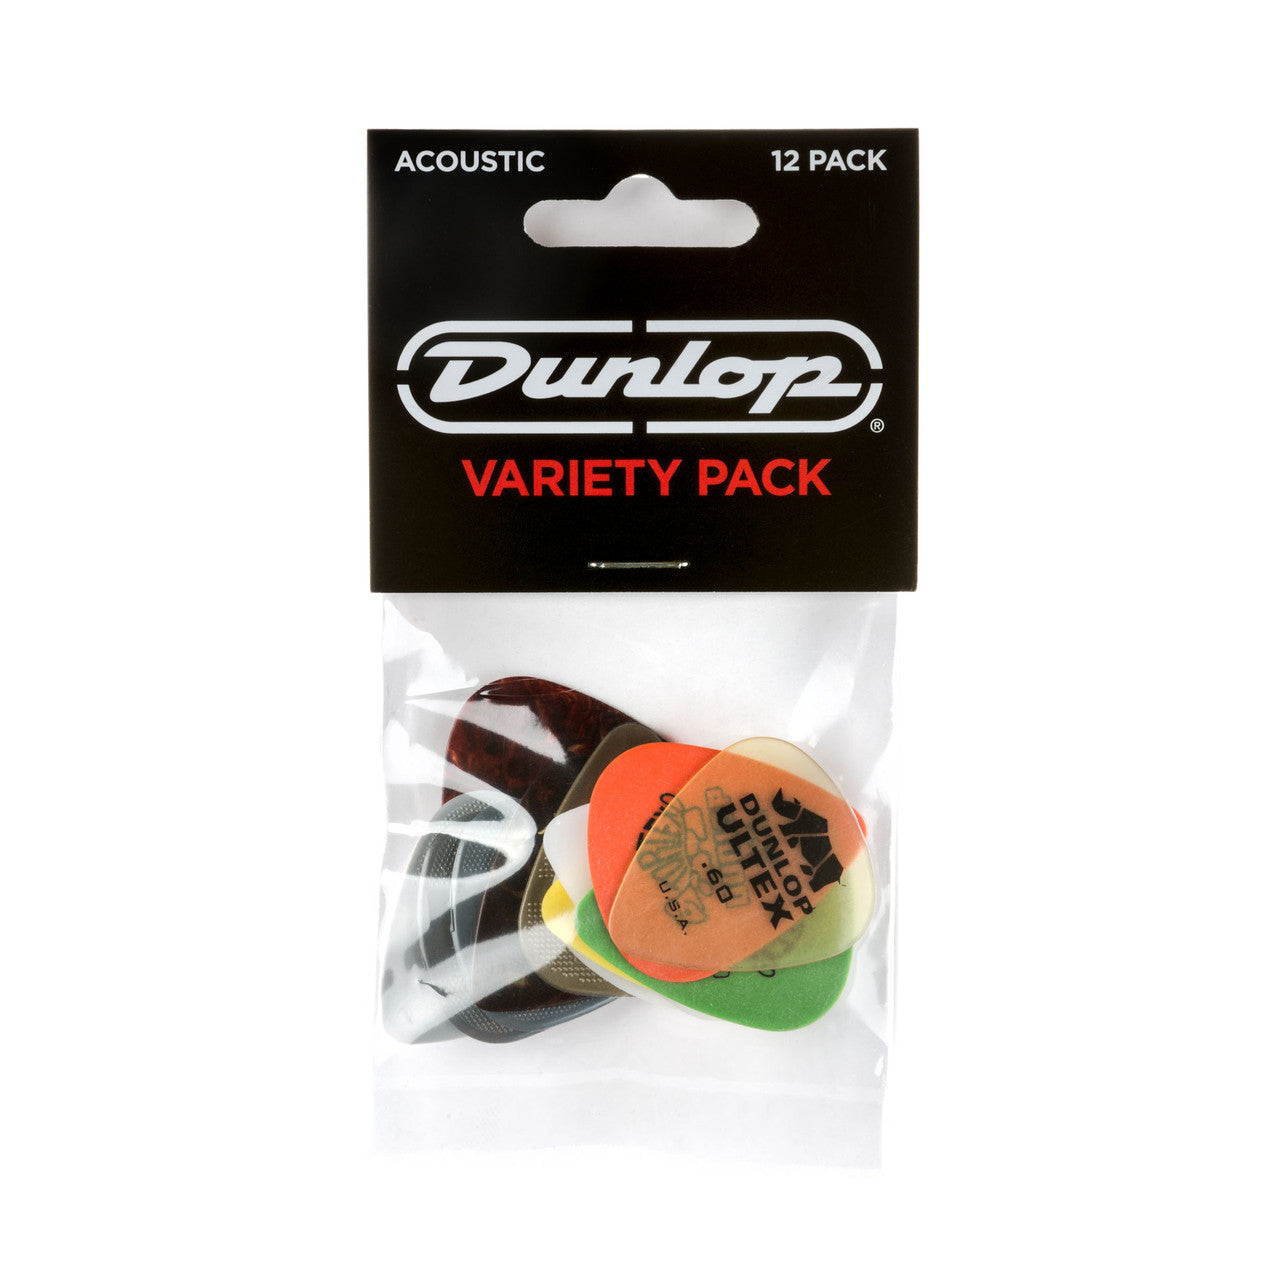 Dunlop Acoustic Variety Pack Picks